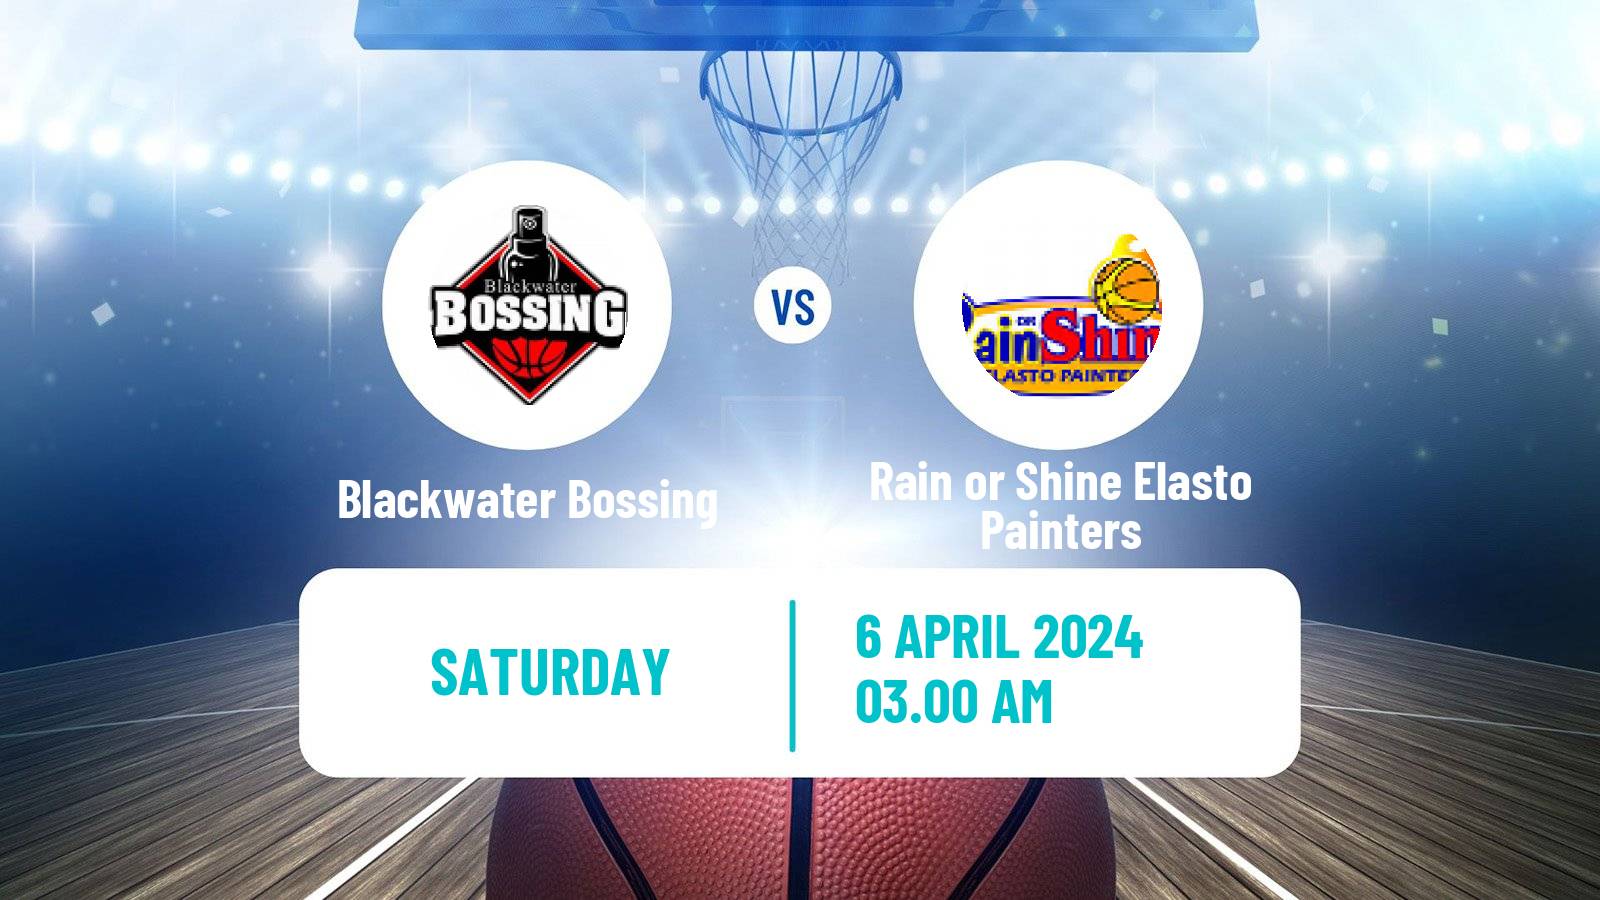 Basketball Philippines Cup Blackwater Bossing - Rain or Shine Elasto Painters